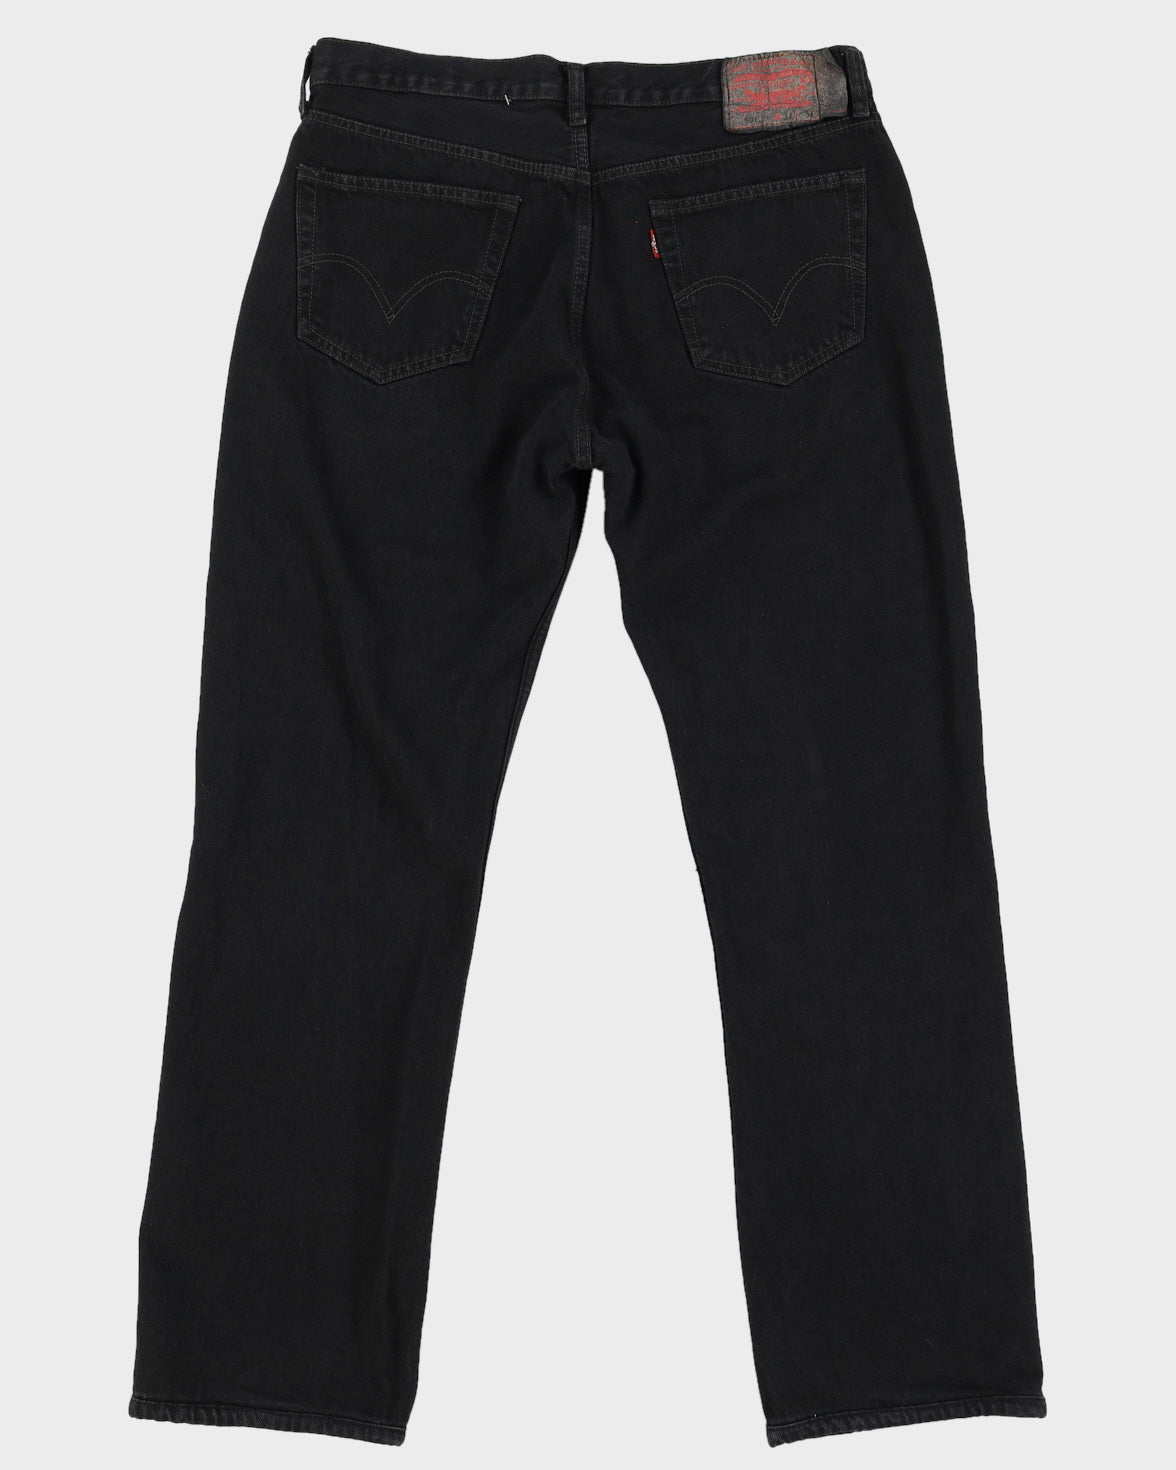 Vintage 90s Levi's 501 Black Dark Washed Jeans - W34 L34